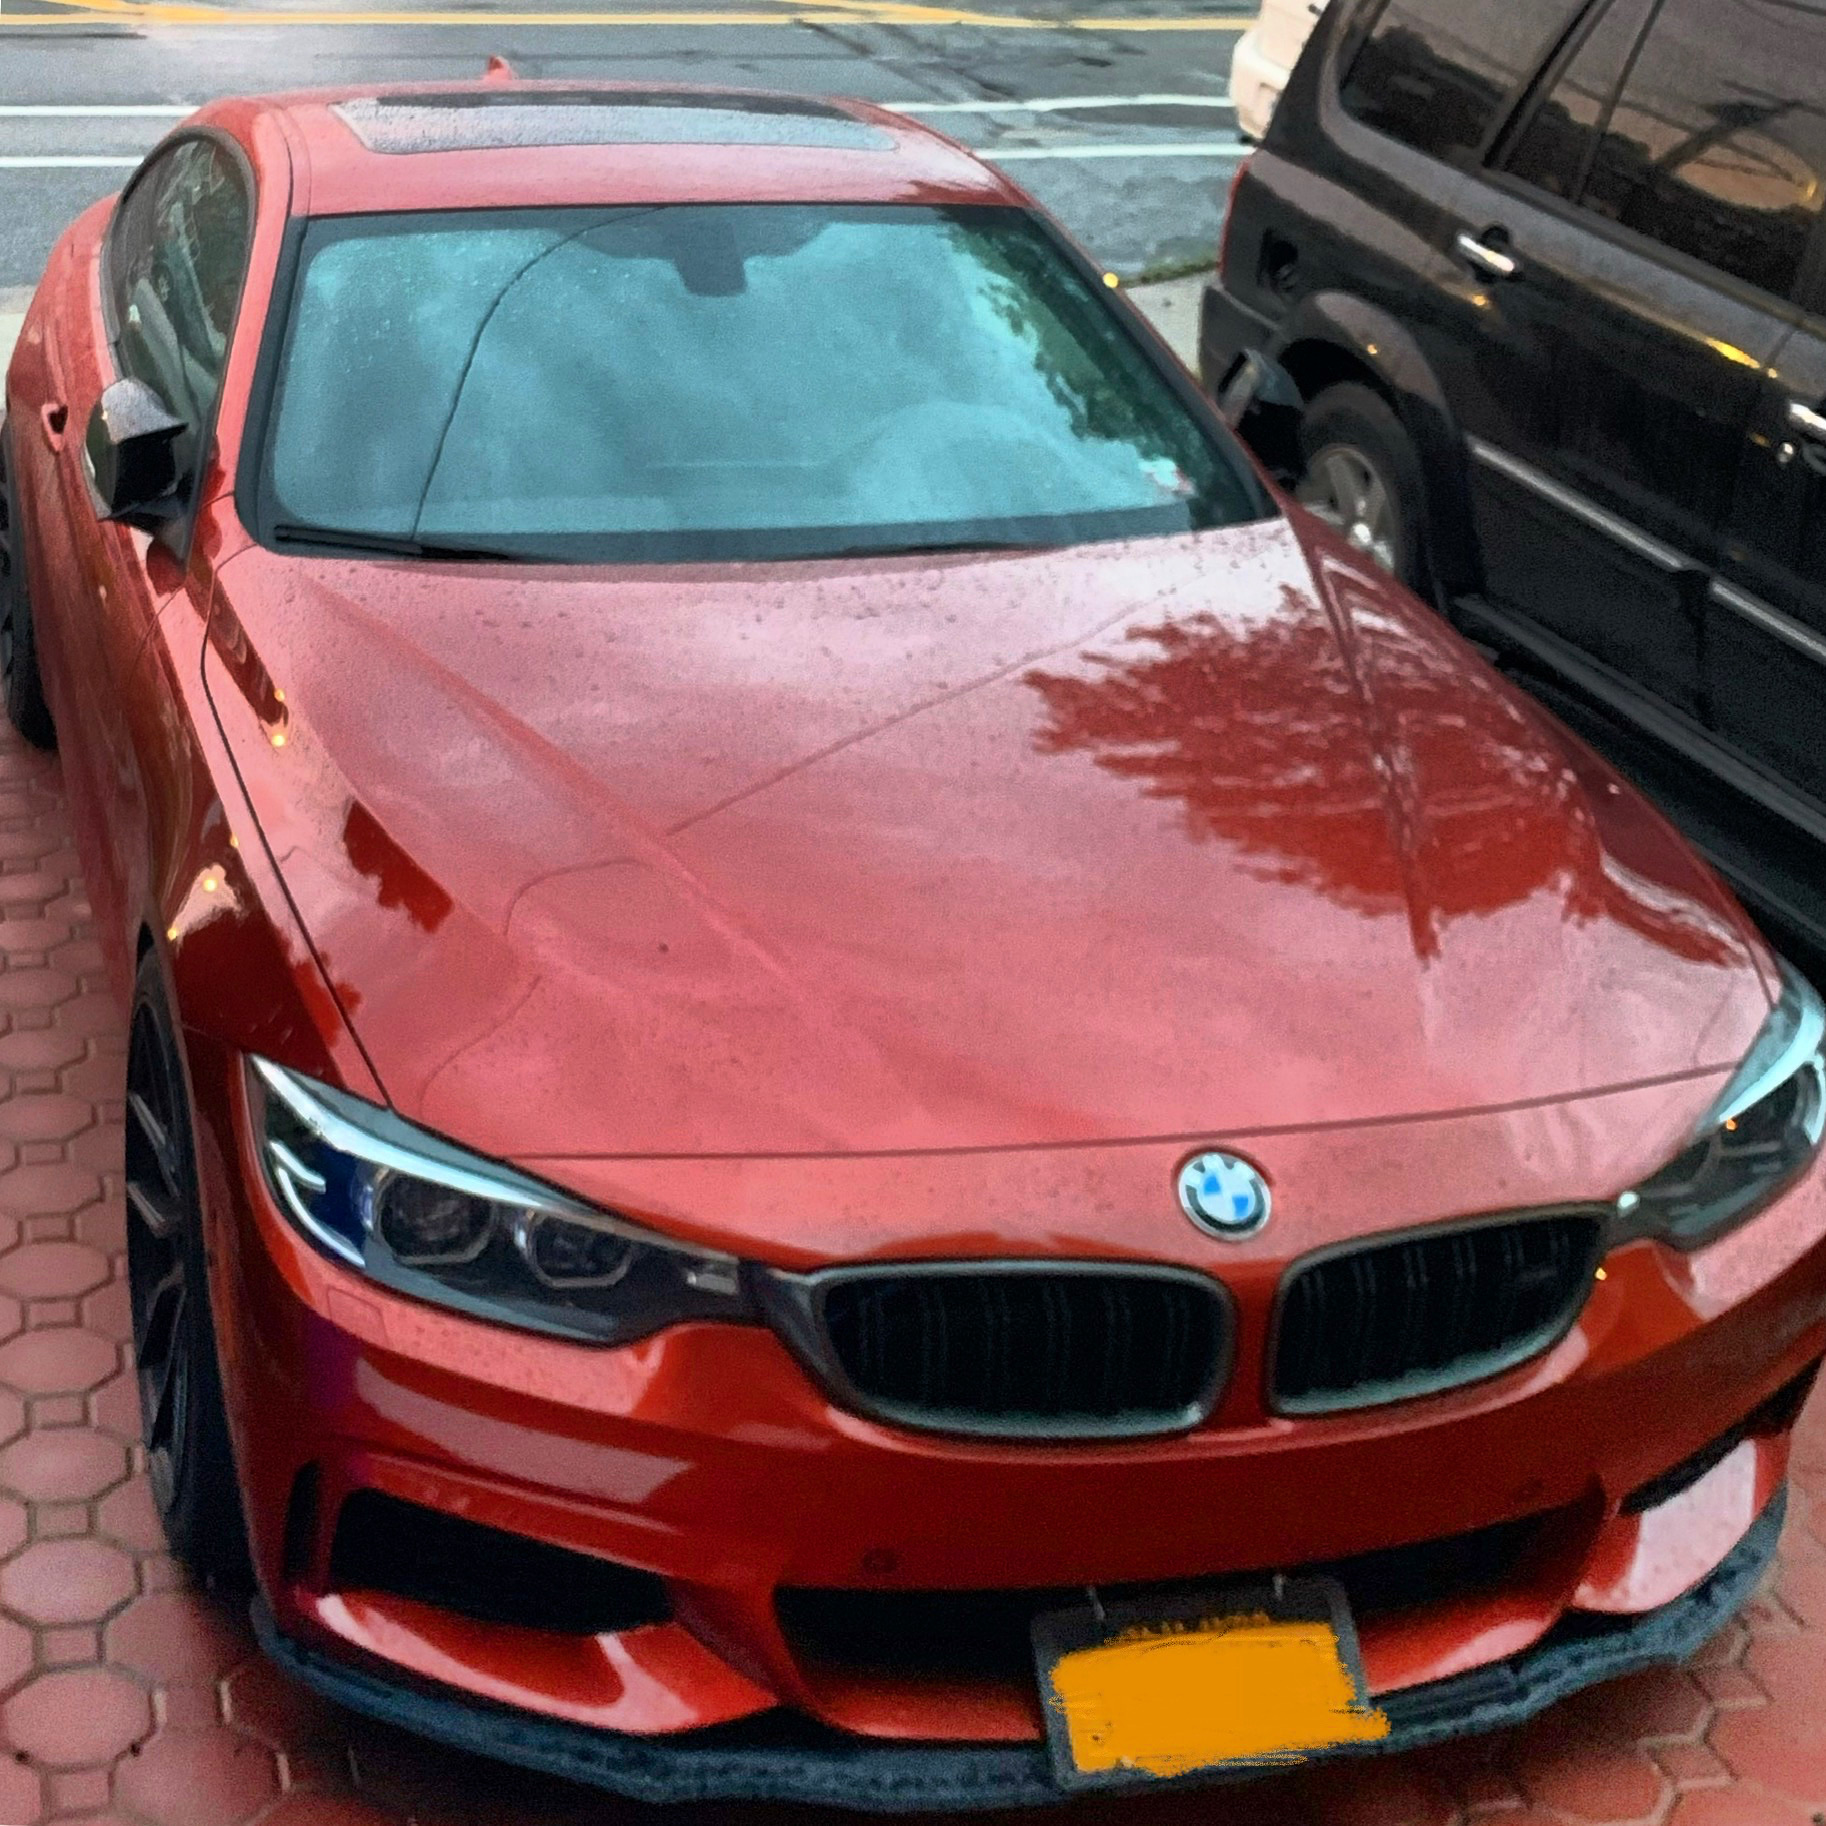 2019 BMW 4 Series - photo 0